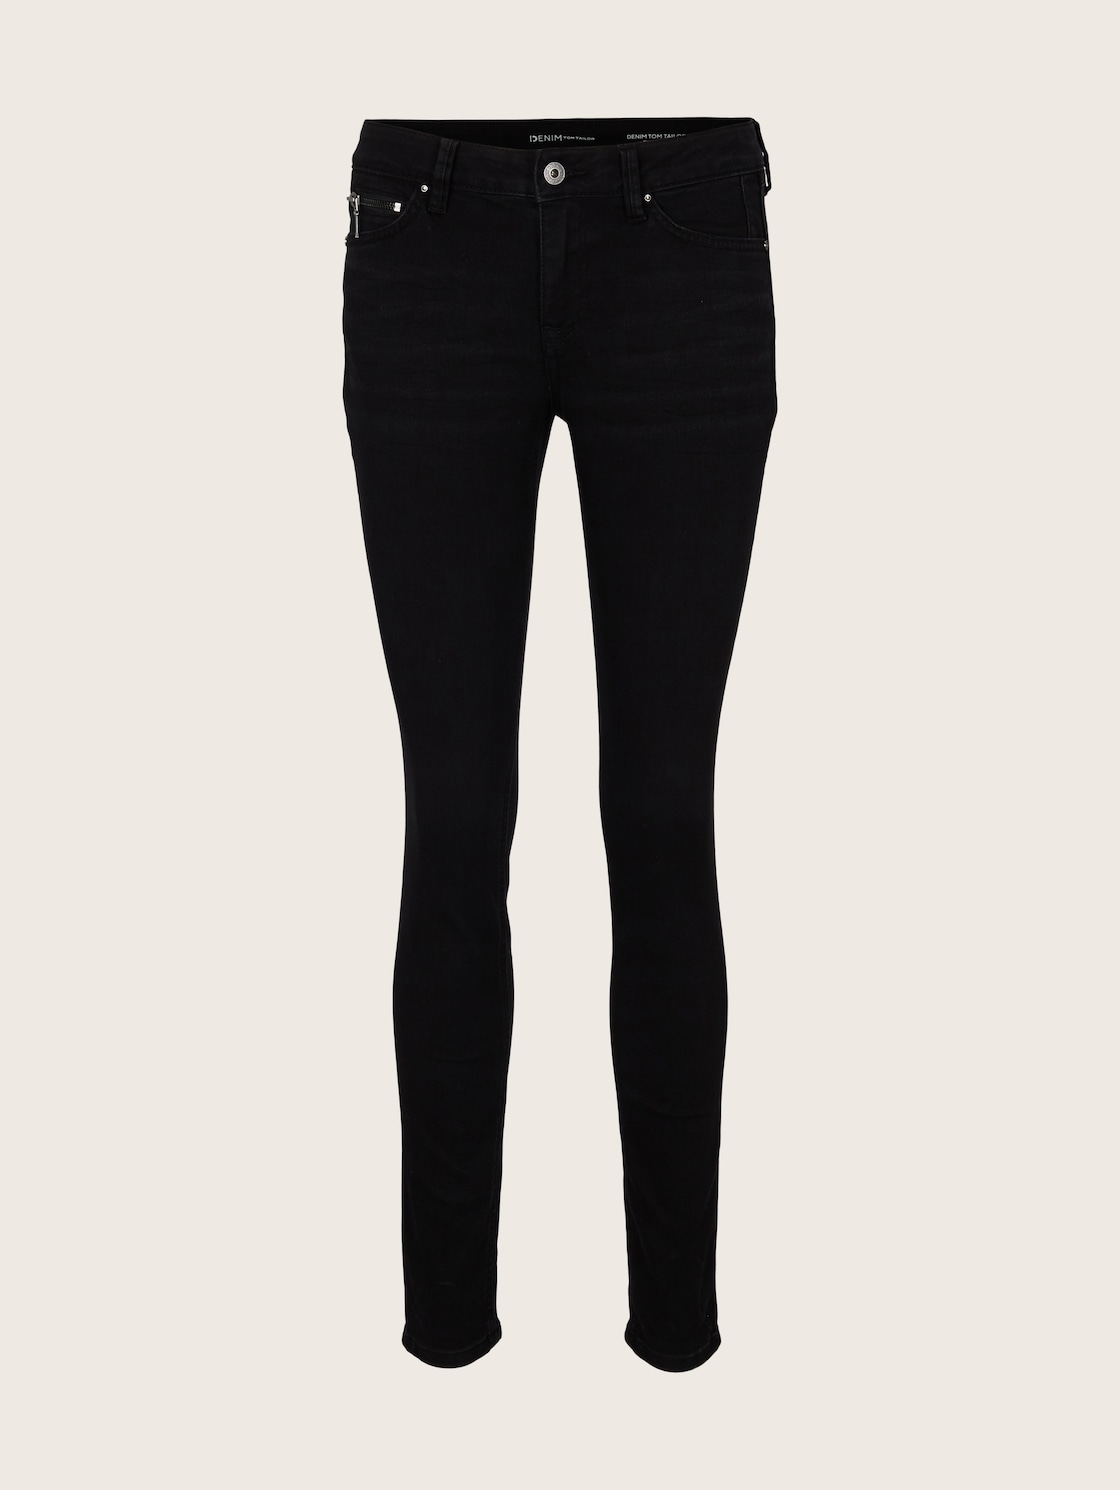 TOM TAILOR DENIM Damen Jona Extra Skinny Jeans mit recyceltem Polyester, schwarz, Uni, Gr. 27/30 von Tom Tailor Denim